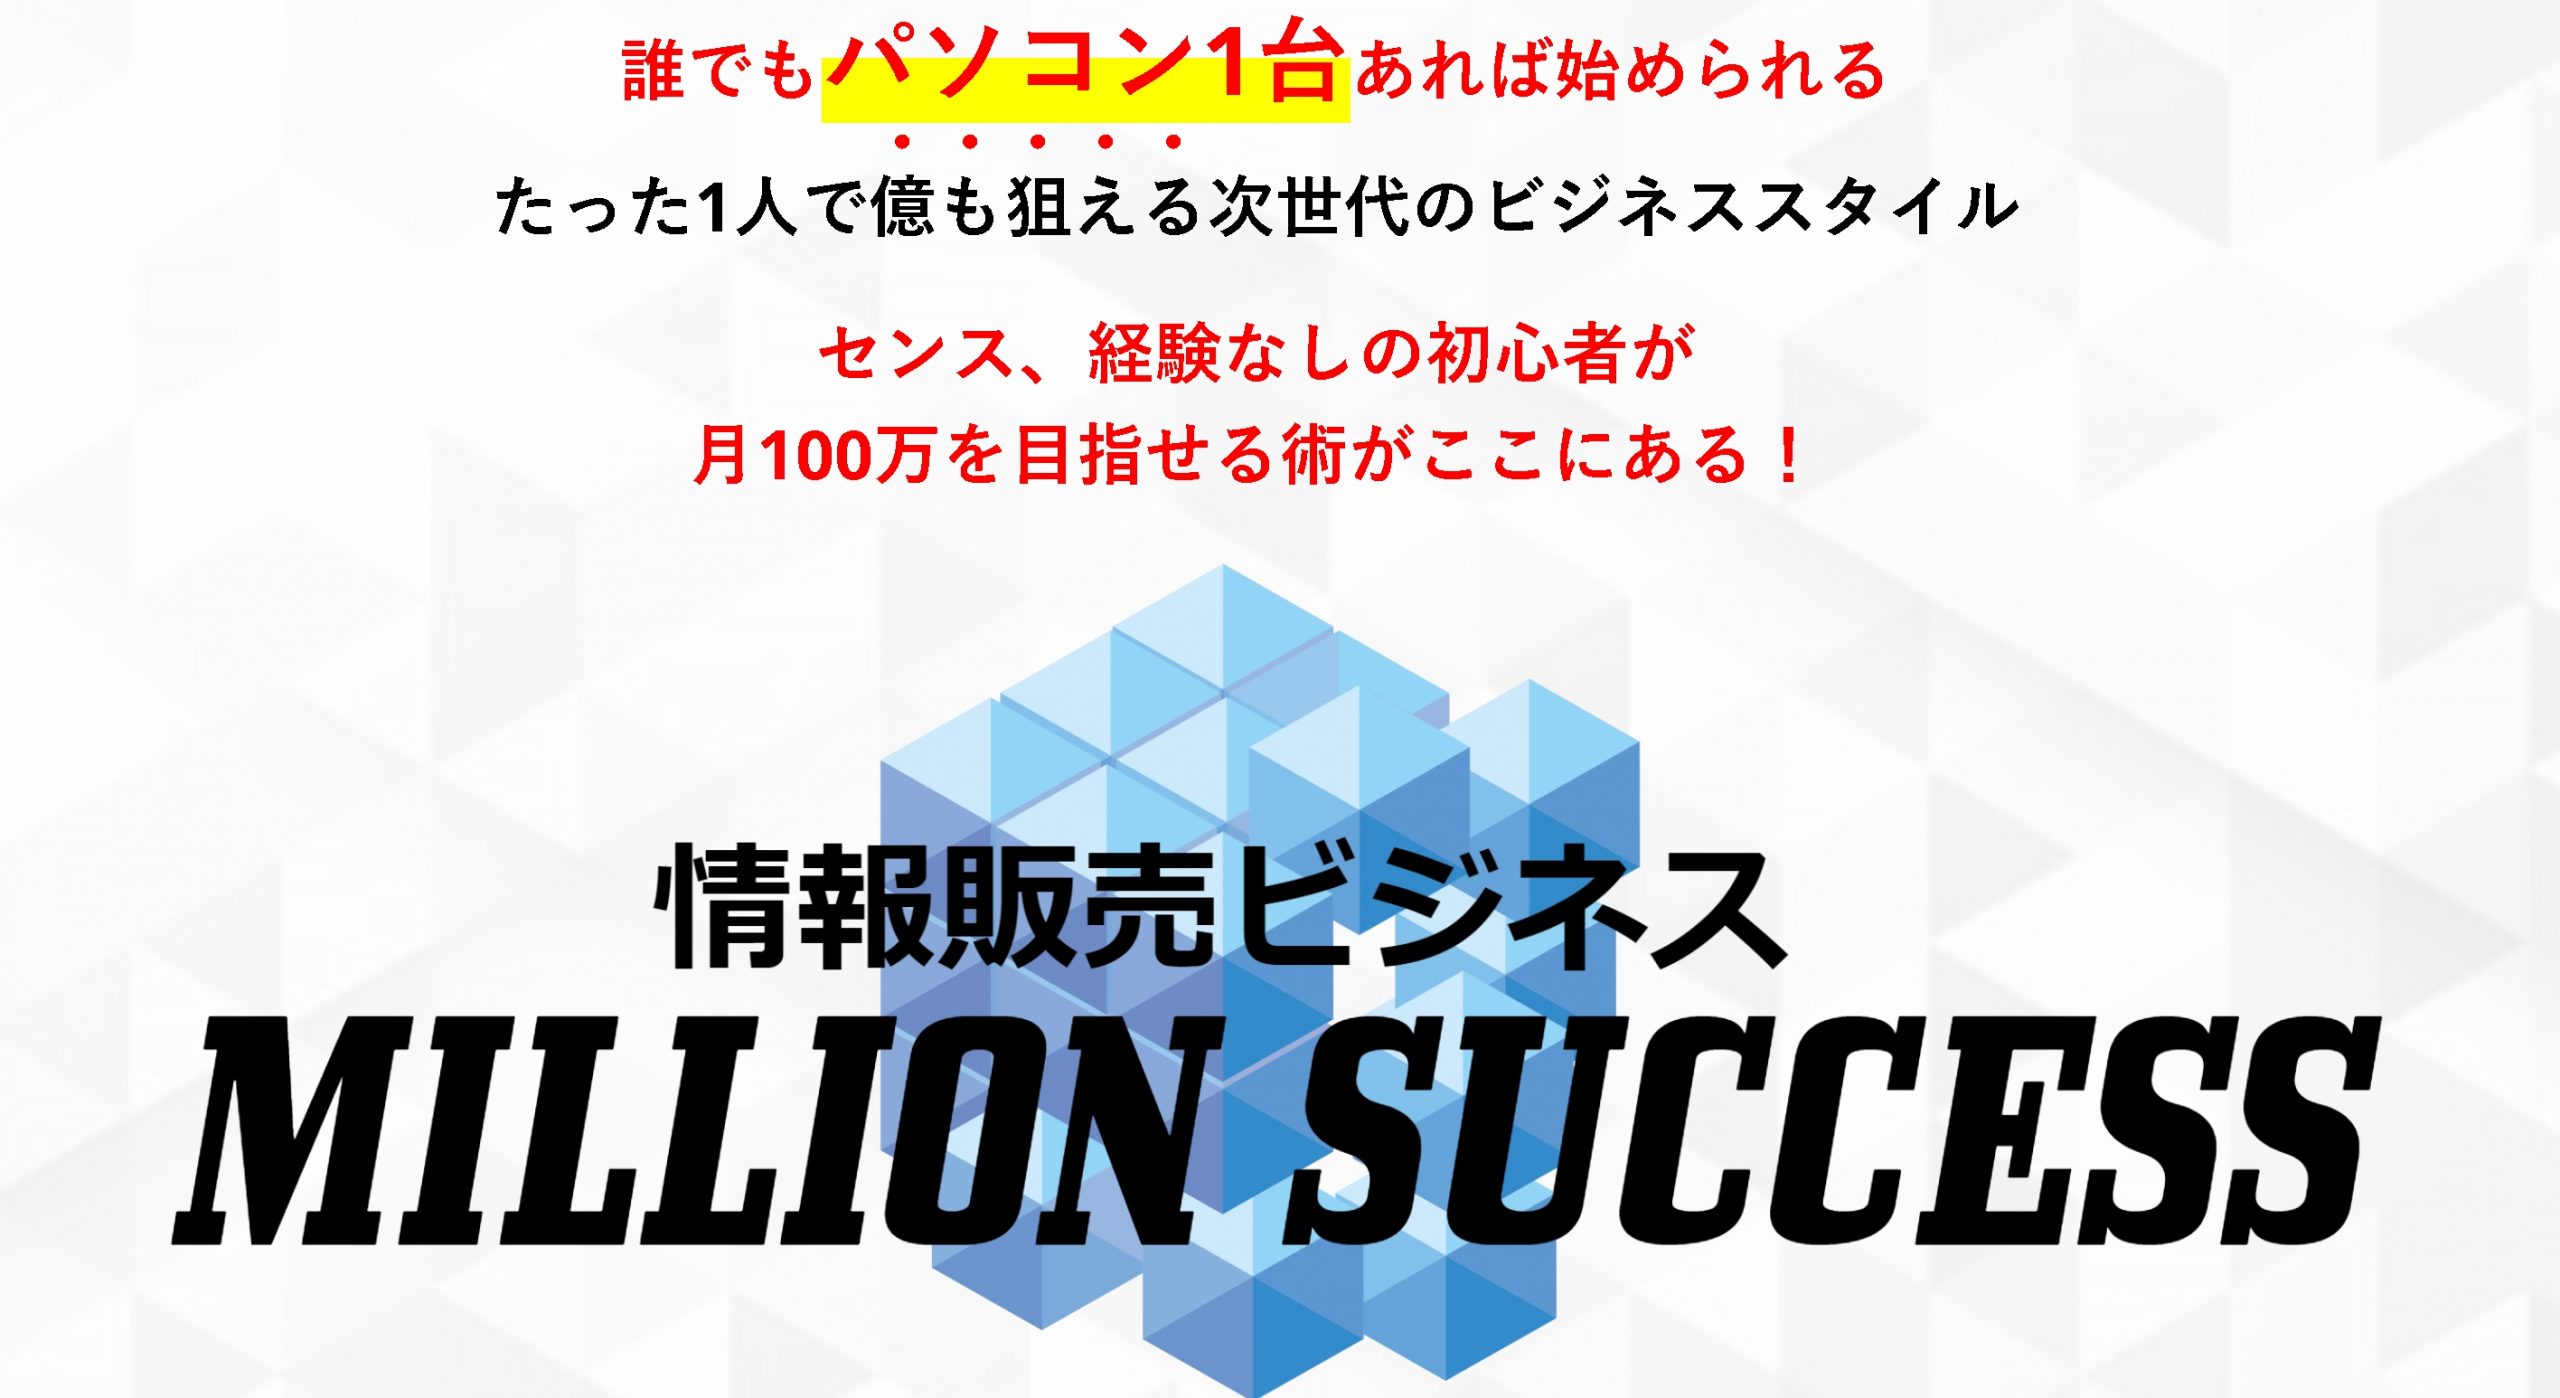 MILLION SUCCESS(吉岡廉/松岡将吾)の特典付きレビュー【情報販売ビジネスを完全攻略】